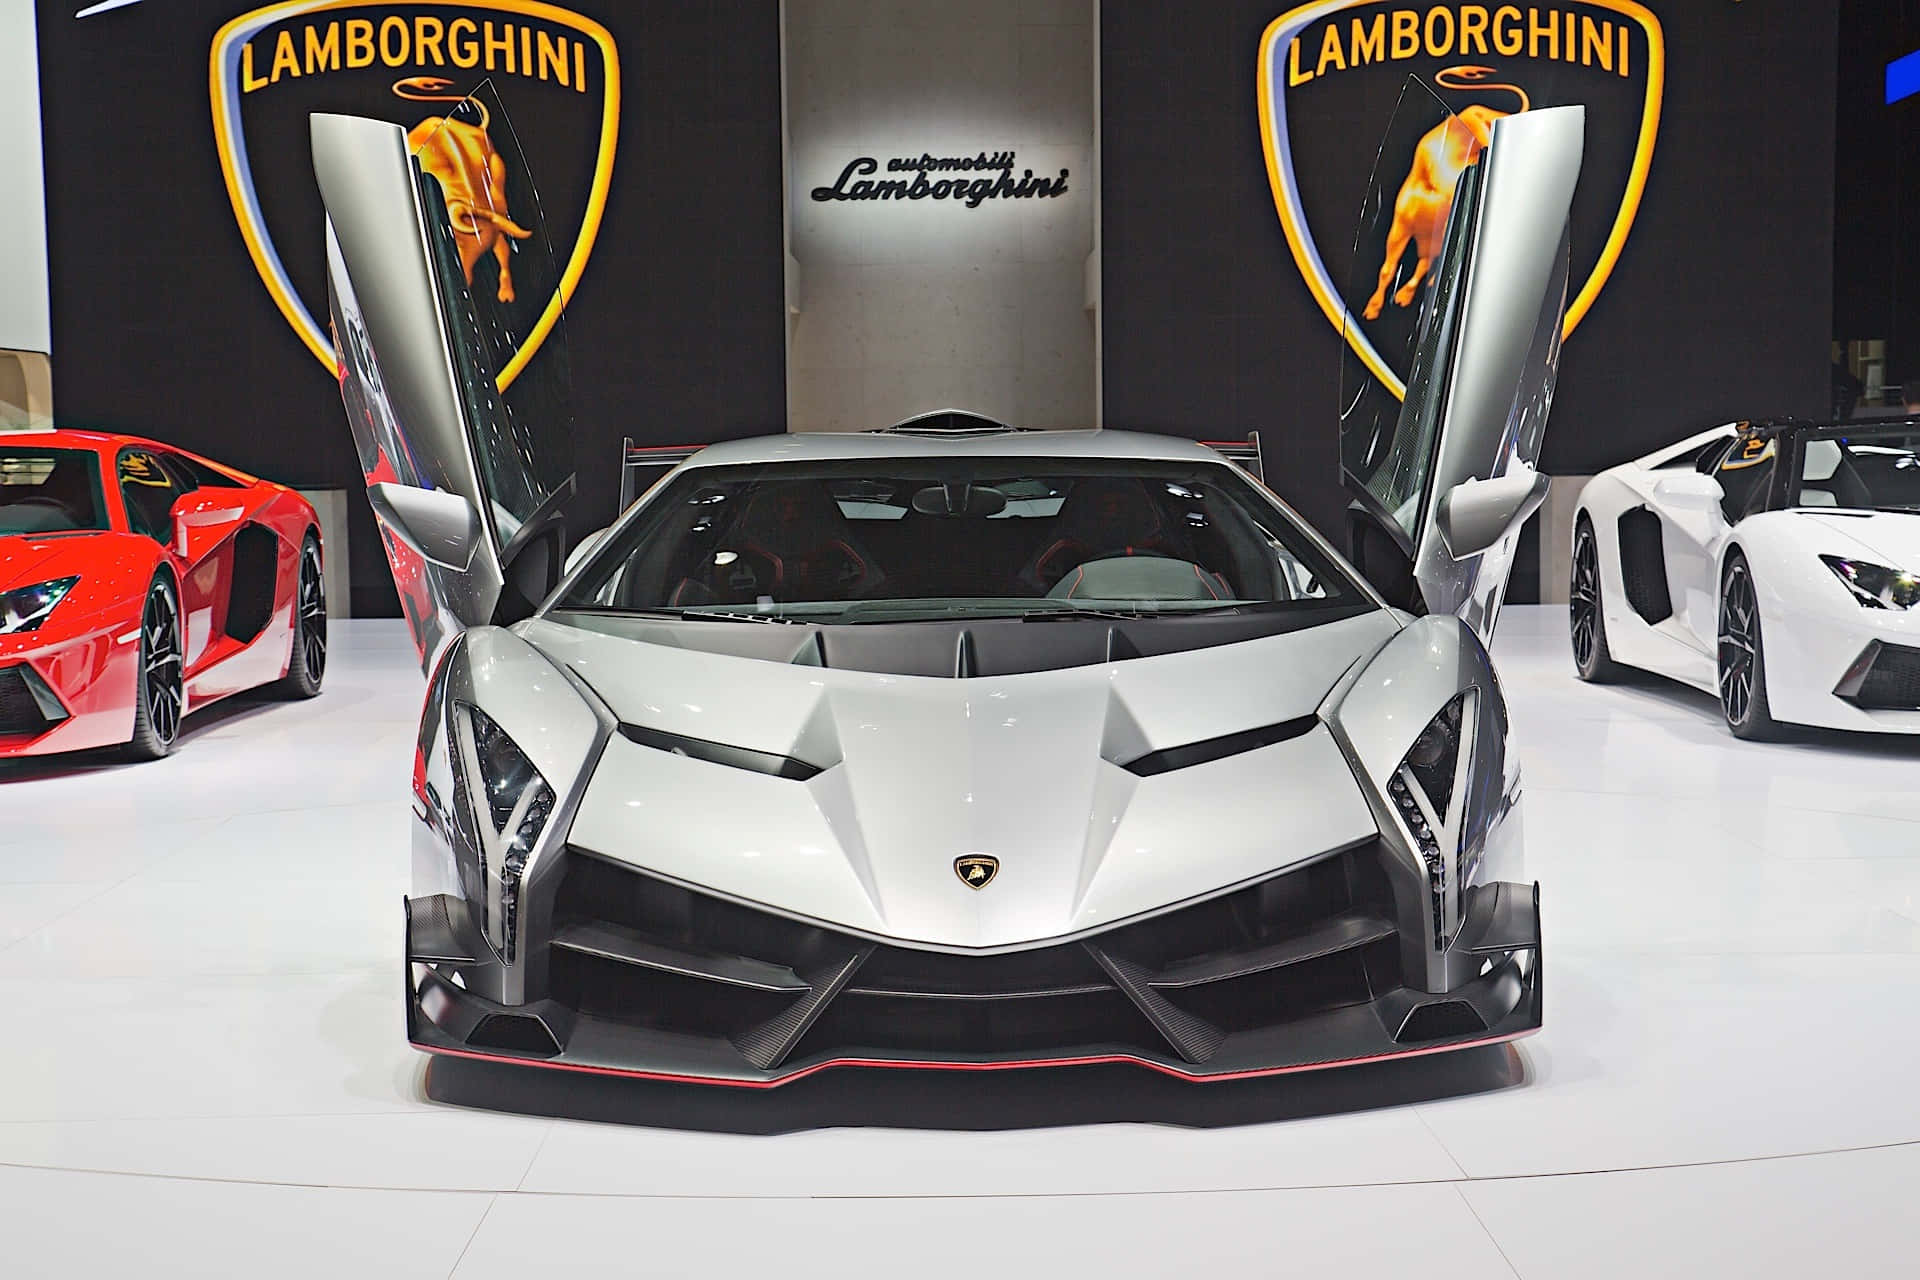 Stunning Lamborghini Veneno in Action Wallpaper